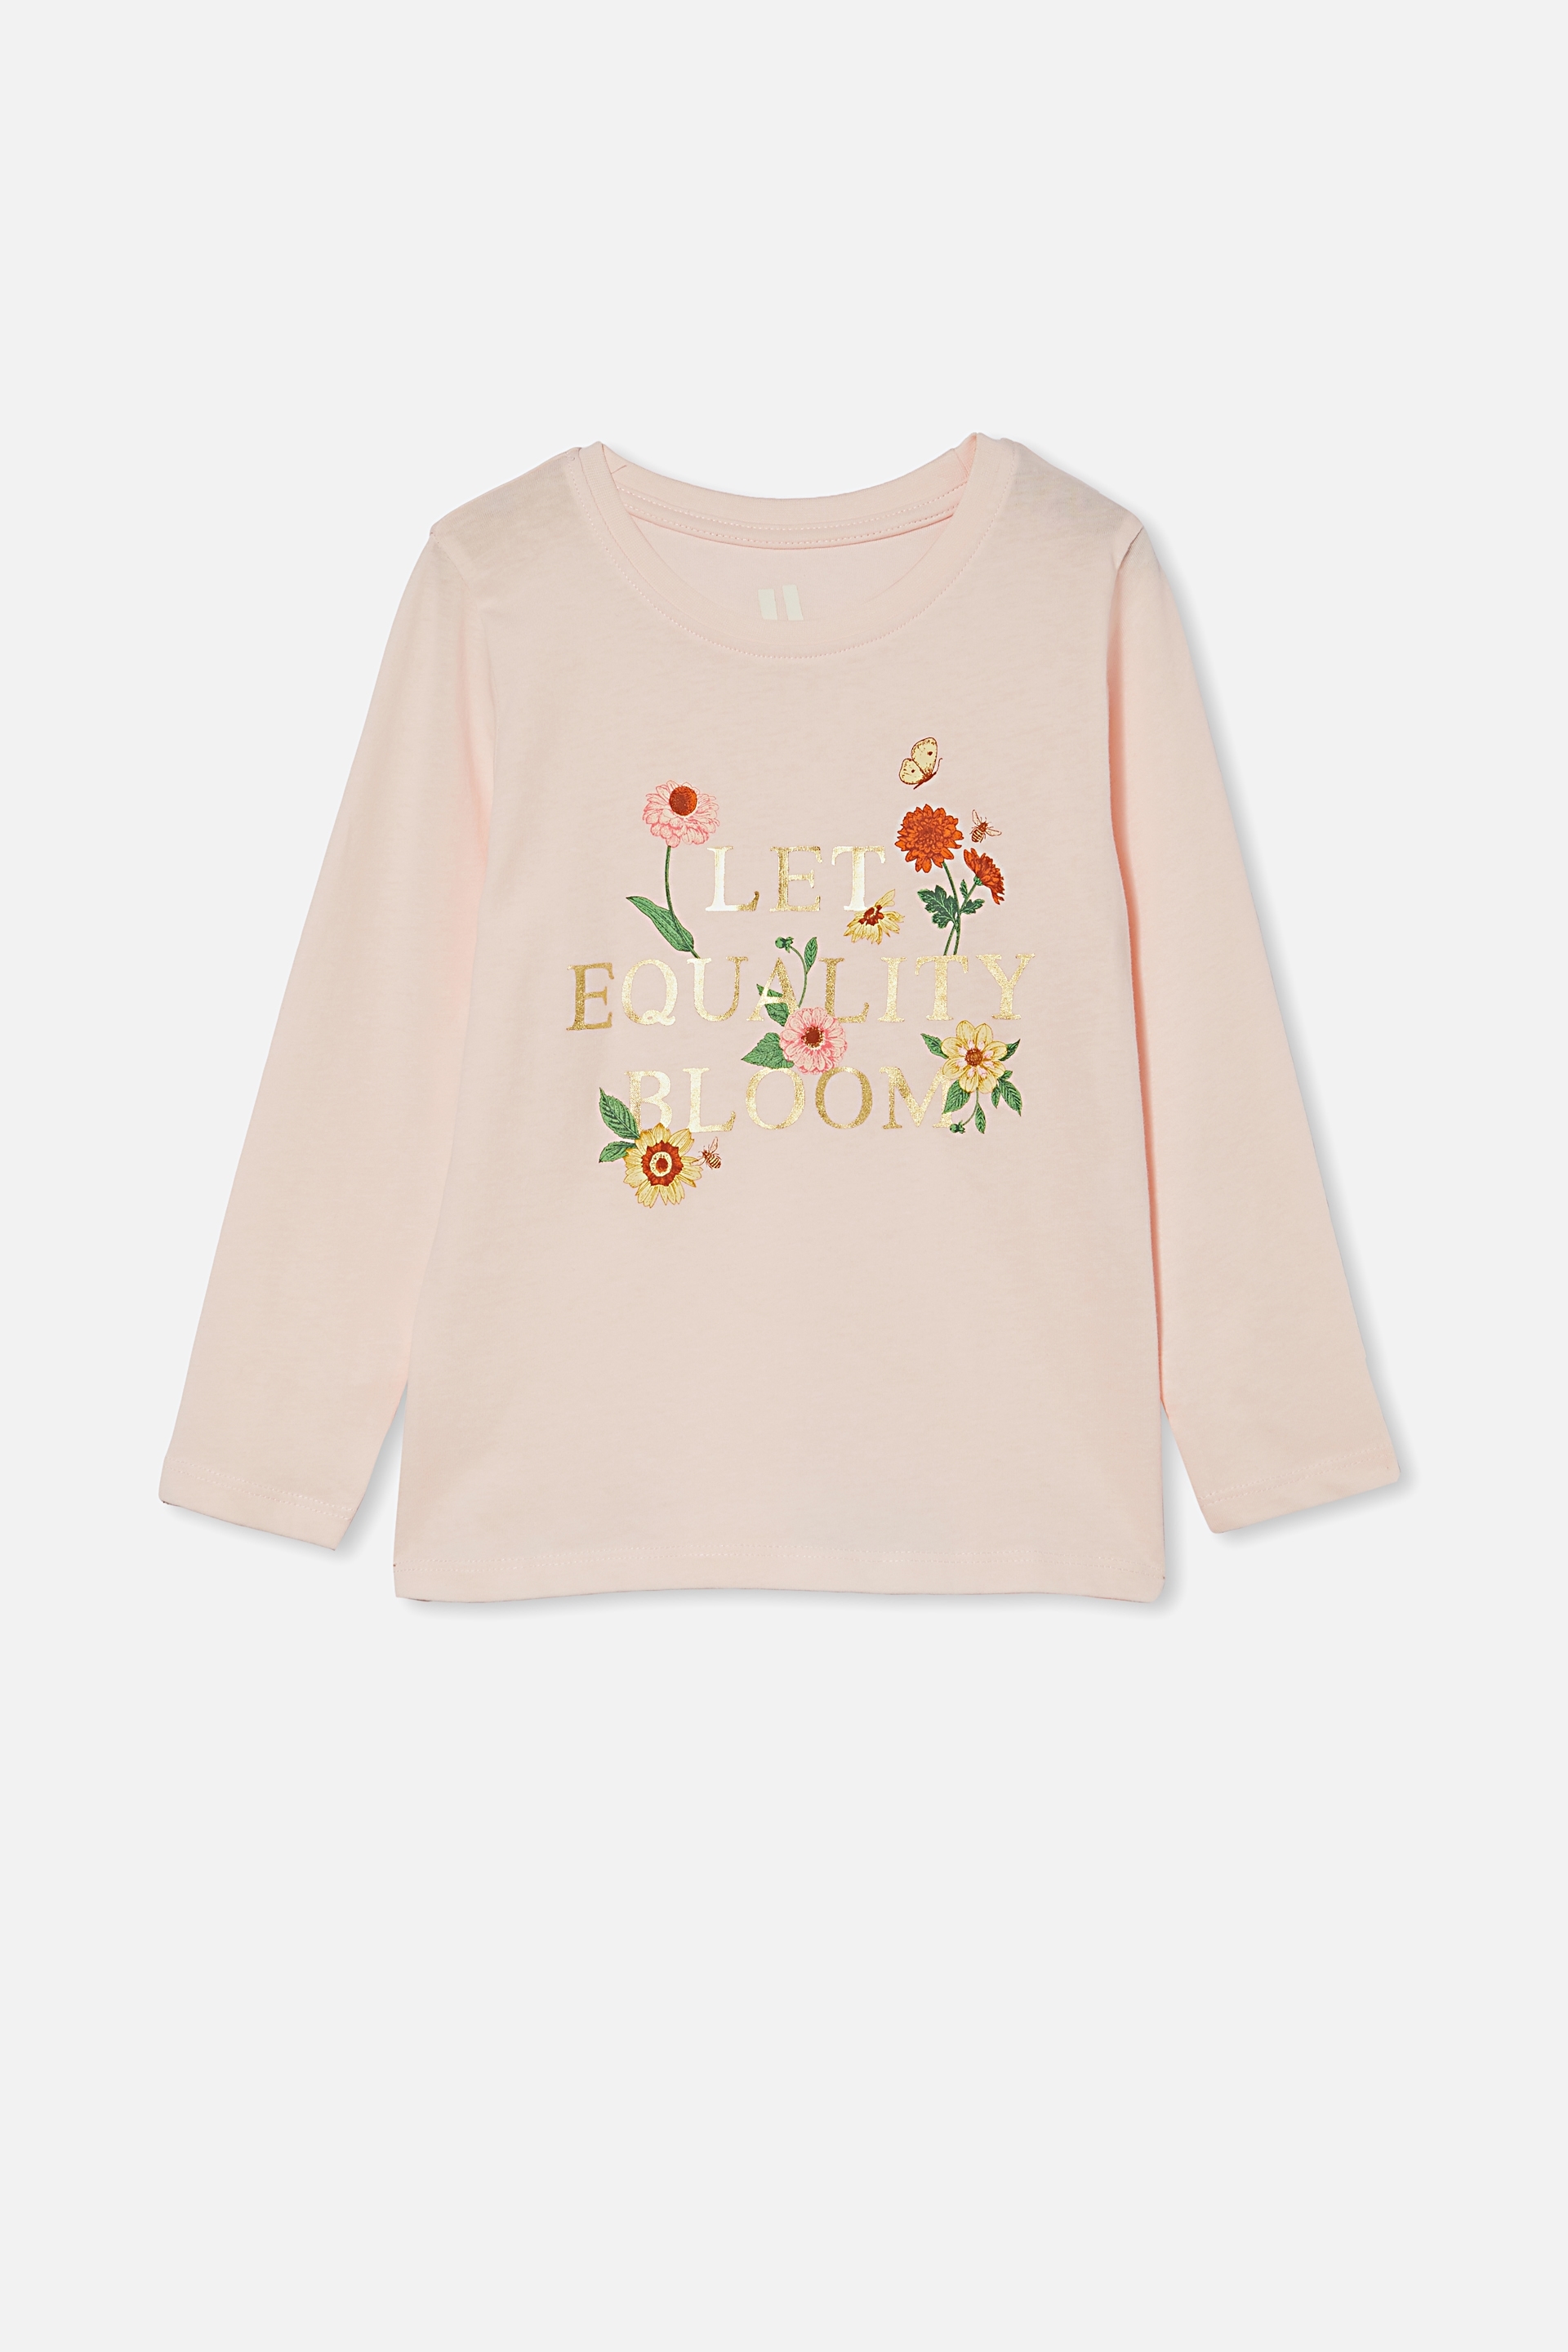 Cotton On Kids - Penelope Long Sleeve Tee - Crystal pink/let equality bloom